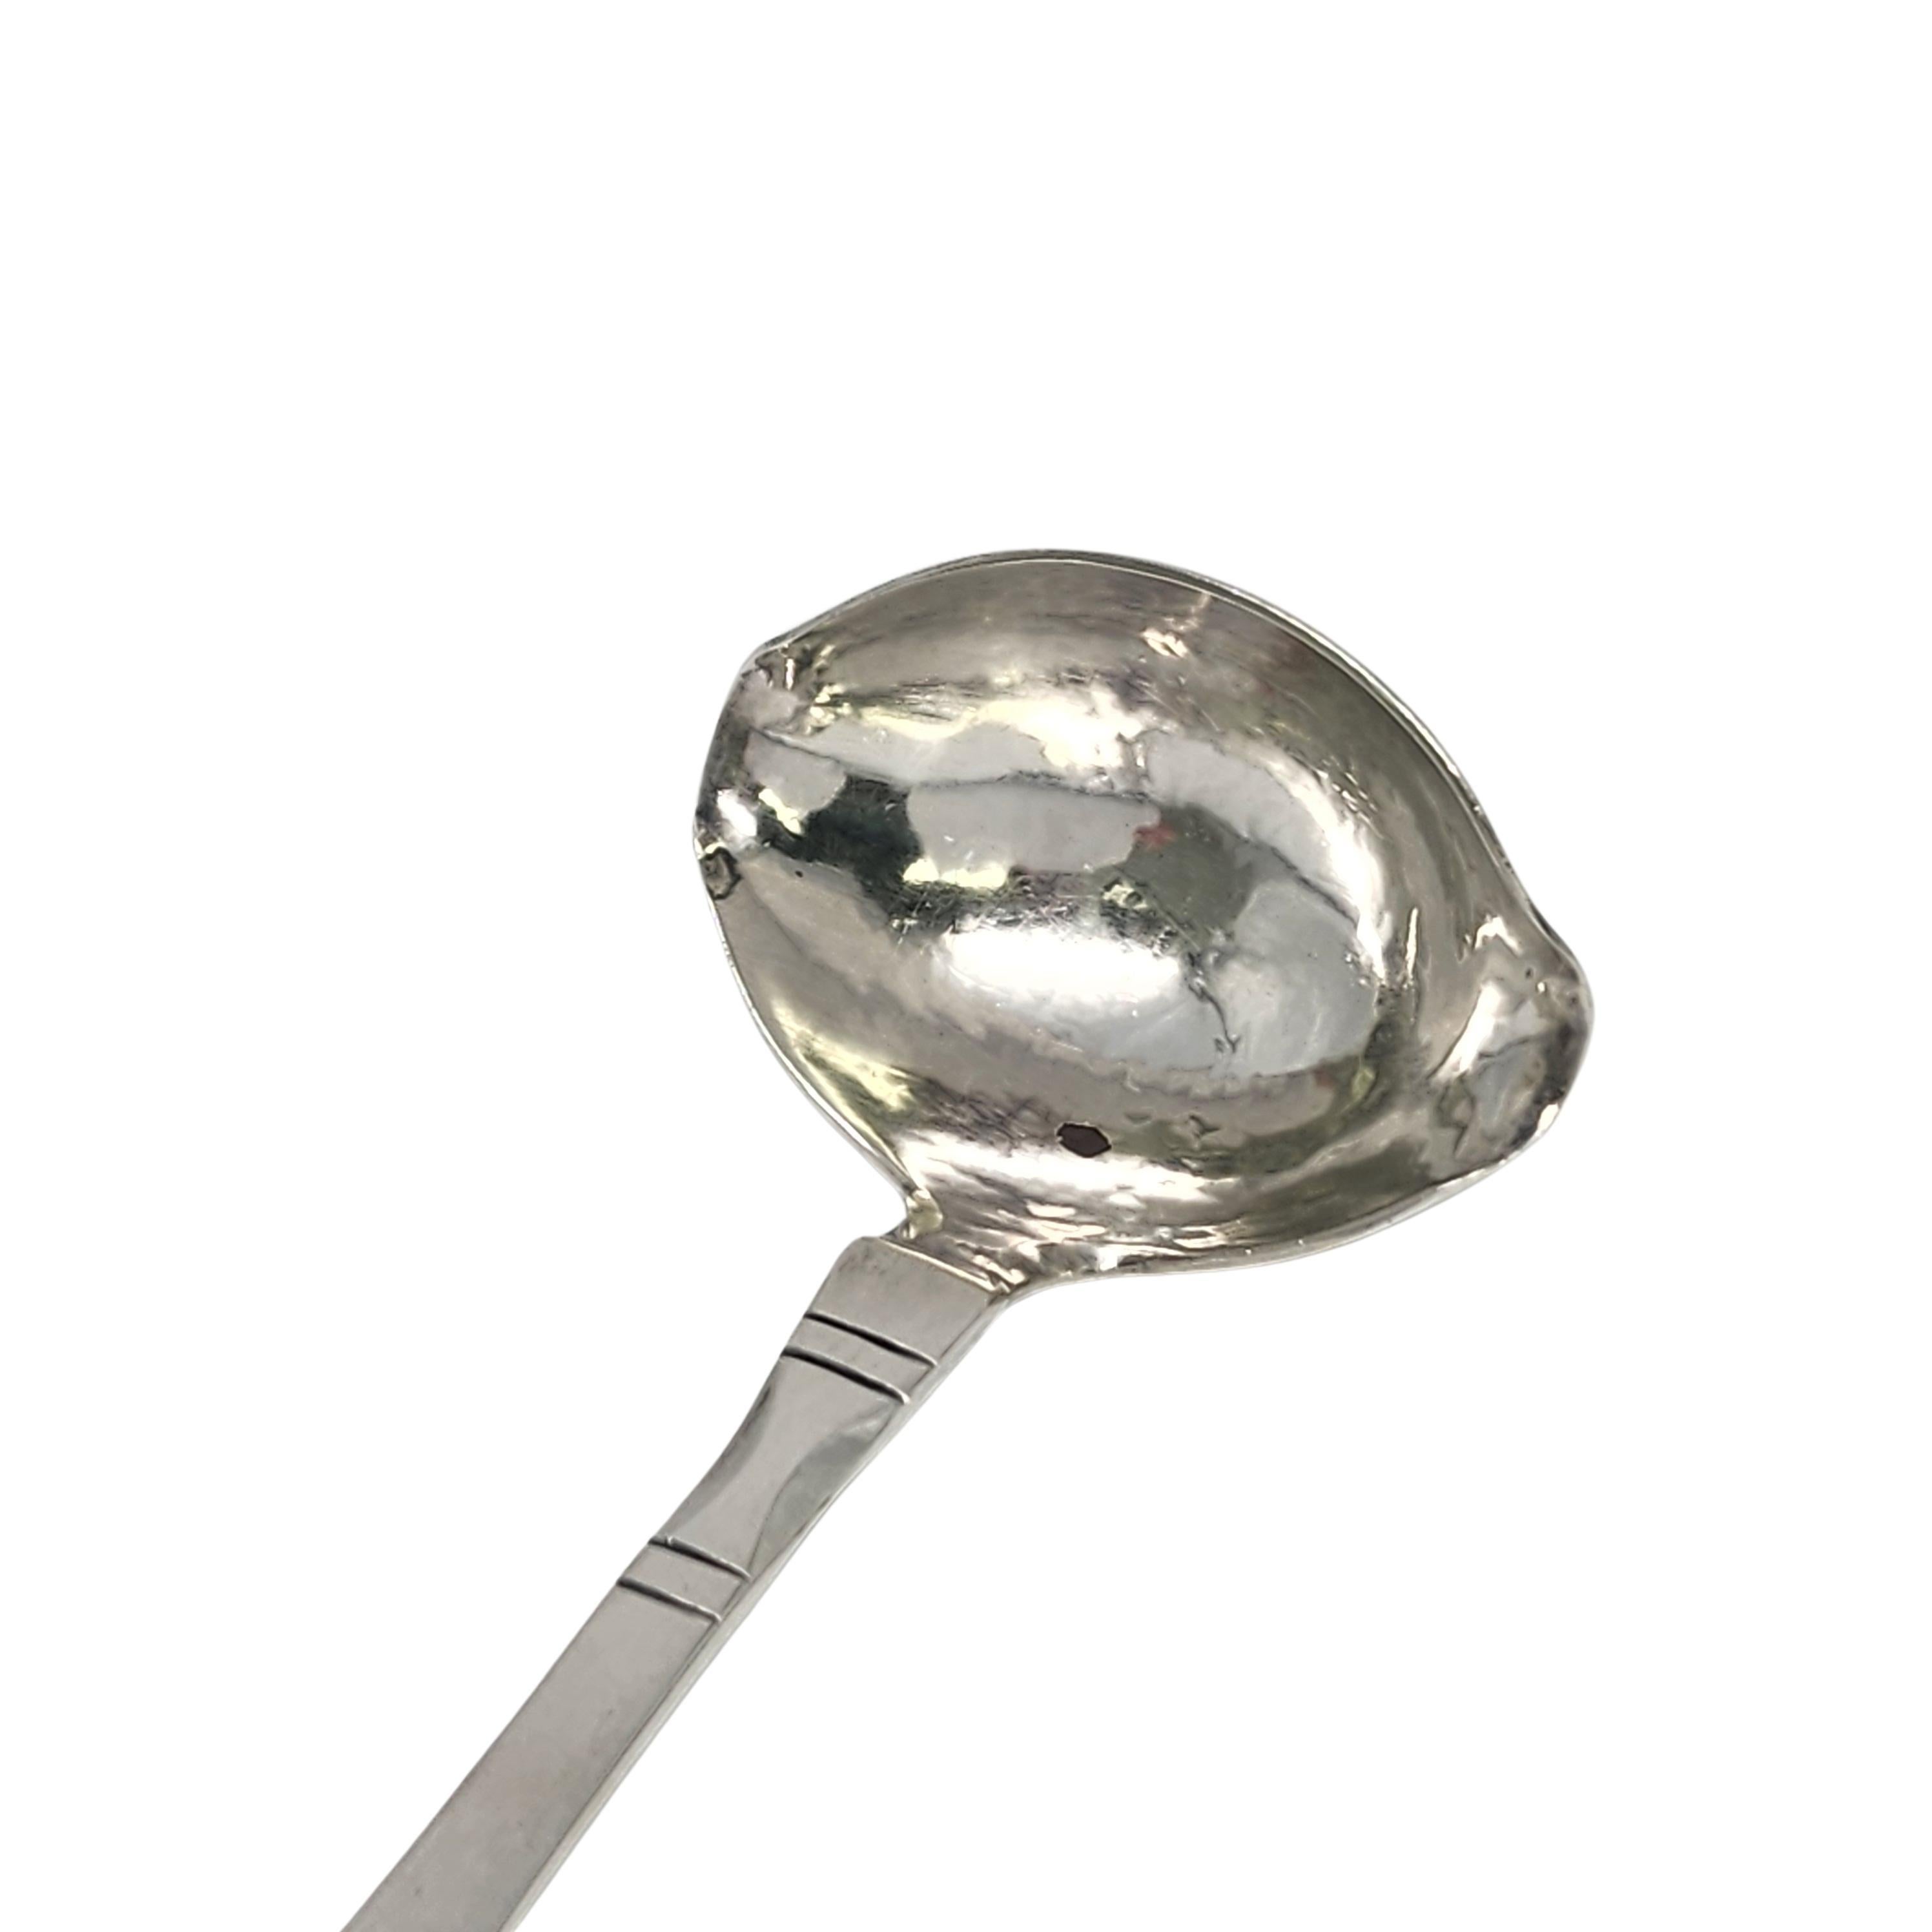 Georg Jensen Denmark Continental Sterling Silver Cream Ladle 5 1/4